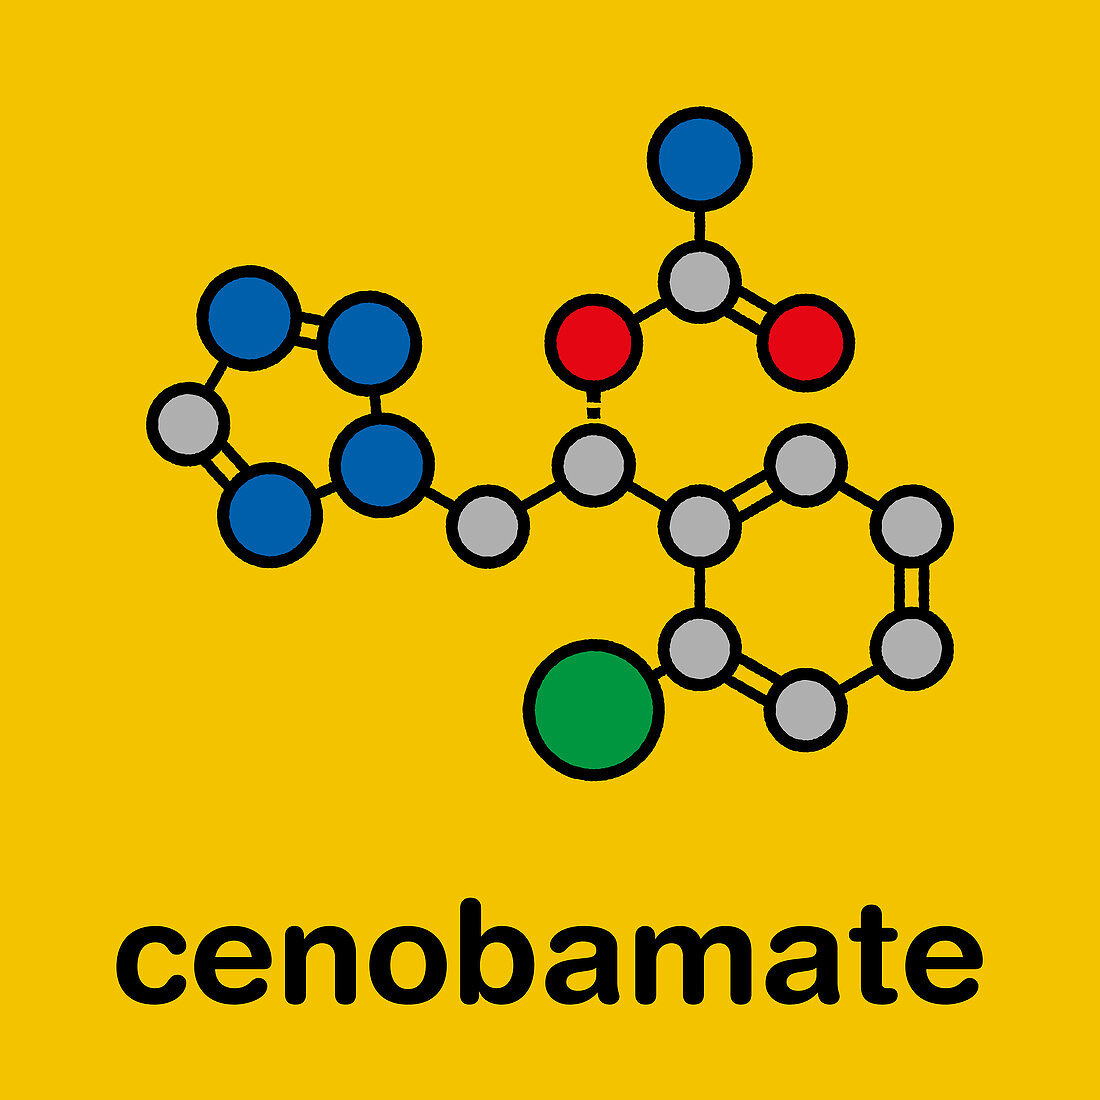 Cenobamate seizures drug molecule, illustration